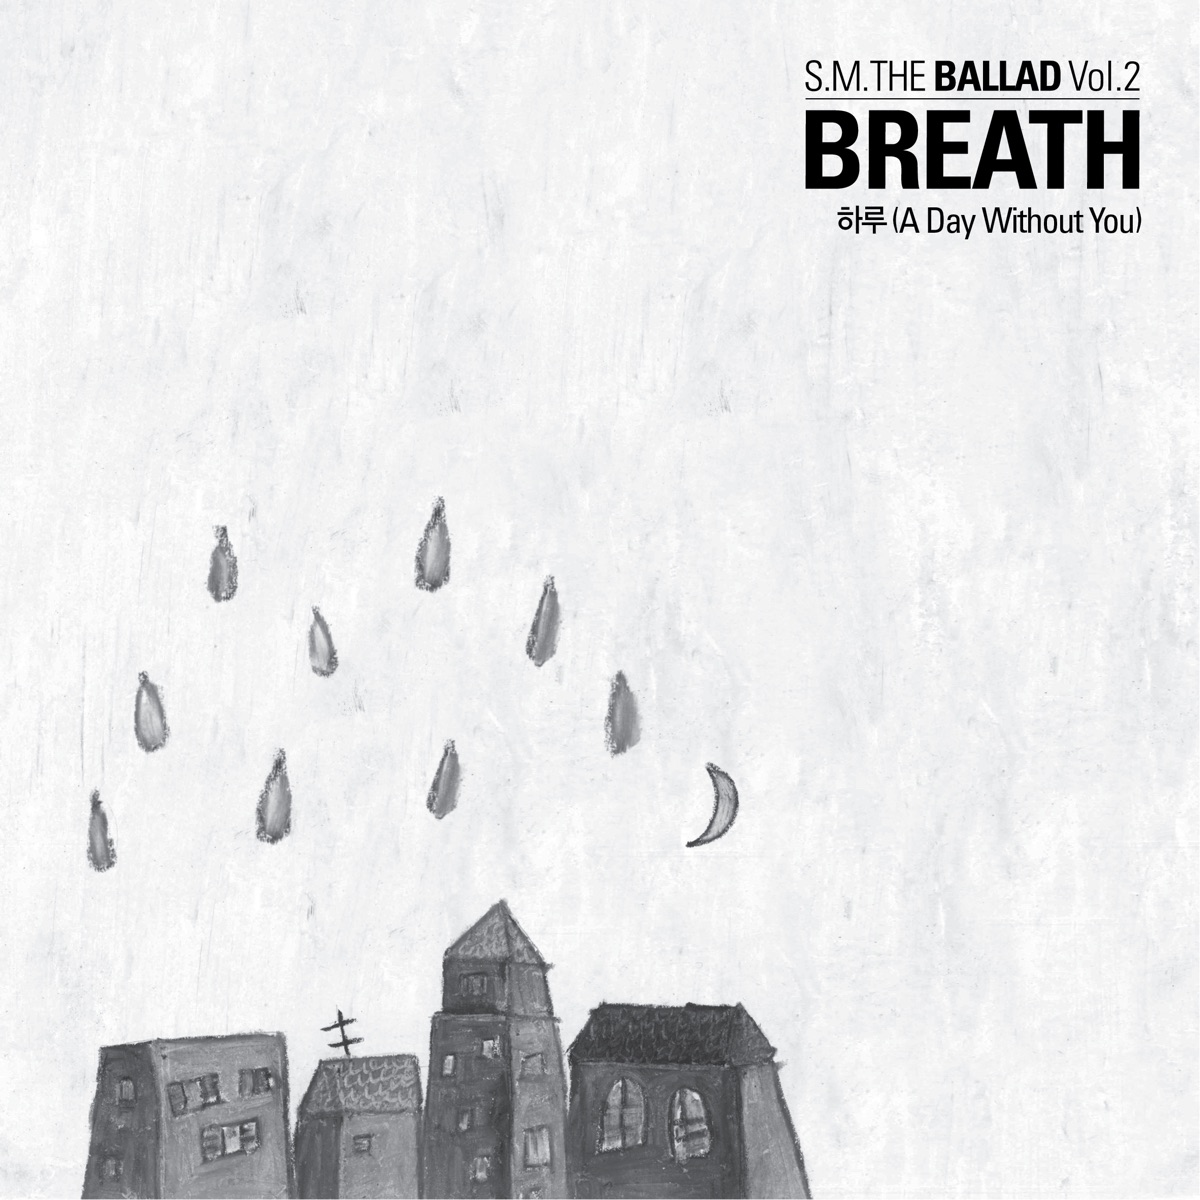 S.M. The Ballad, Vol. 2 'Breath' - Album by S.M. THE BALLAD - Apple Music